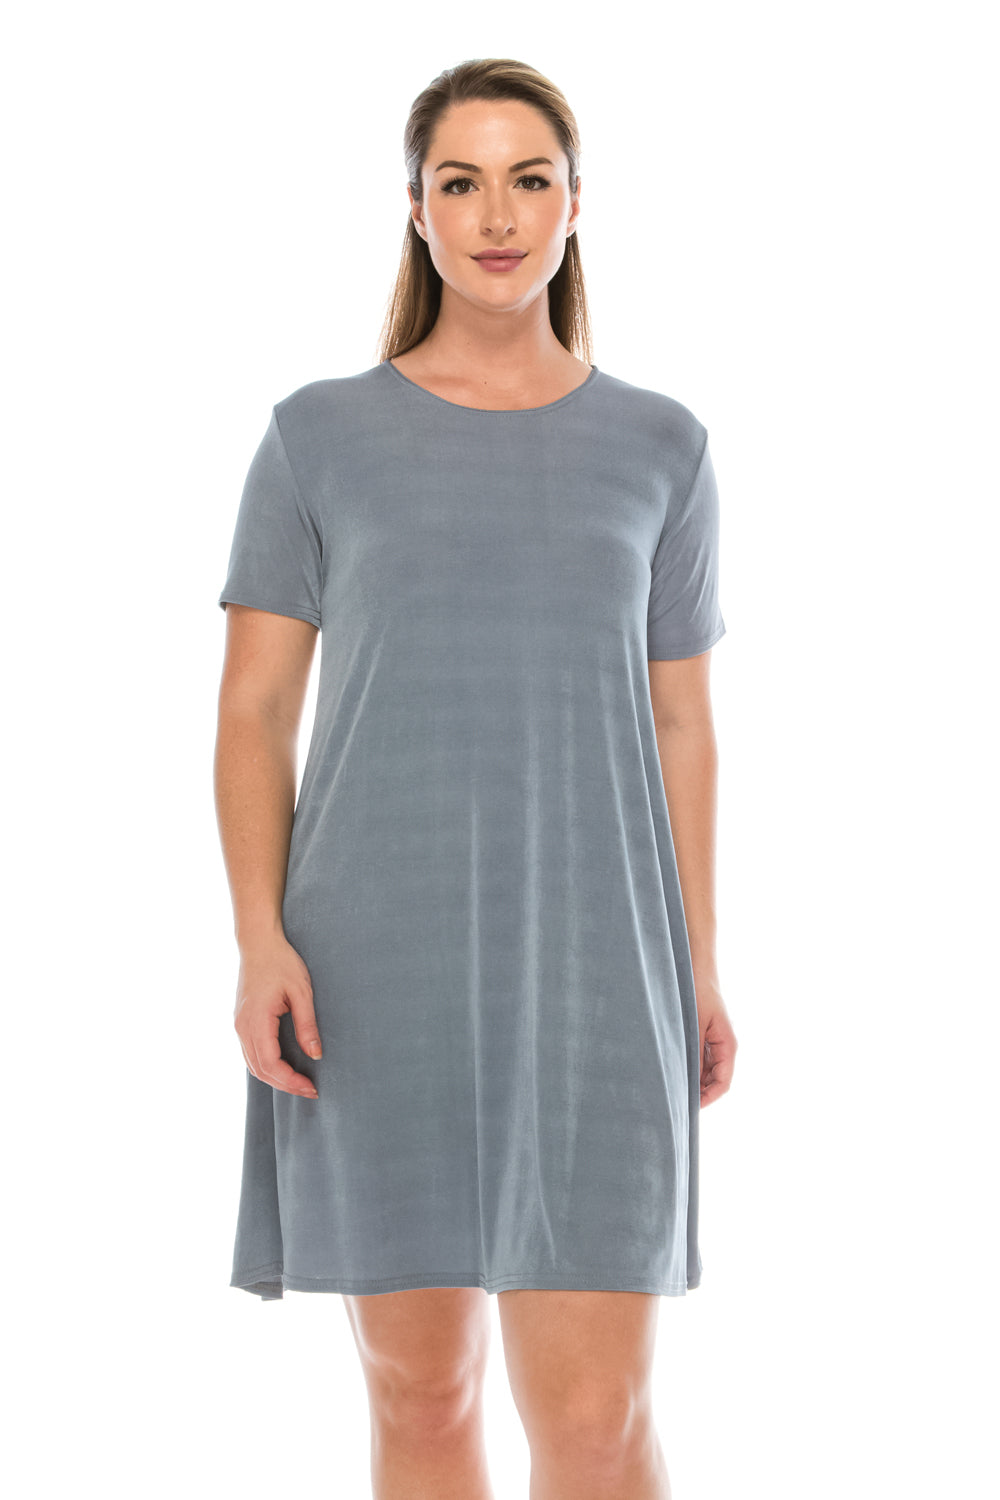 Jostar Women's Stretchy Missy Dress Short Sleeve, 704BN-S - Jostar Online